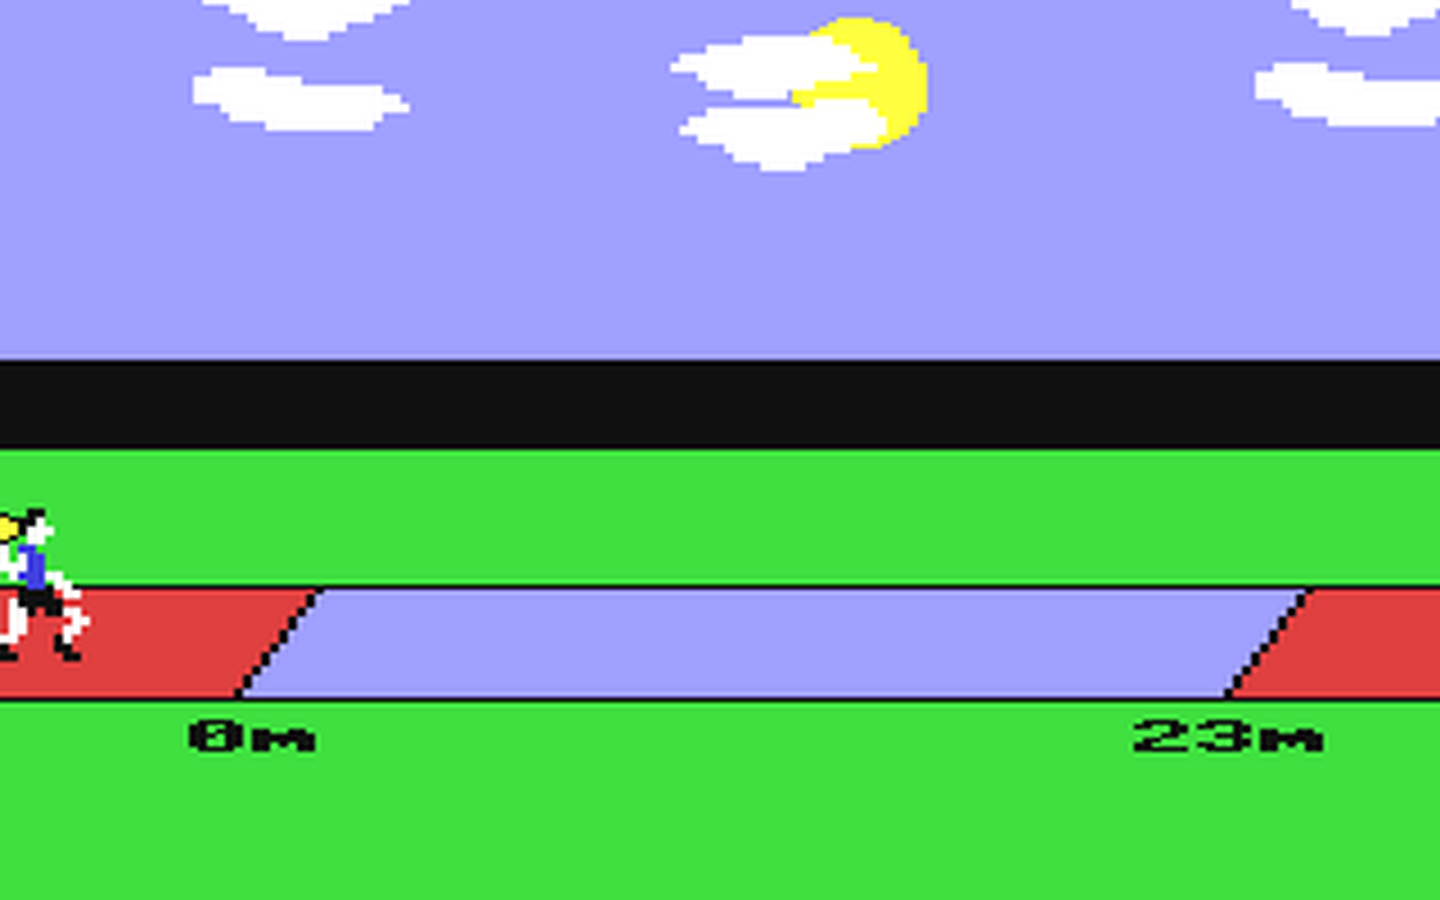 C64 GameBase Krüppel-Olympic (Public_Domain) 1986